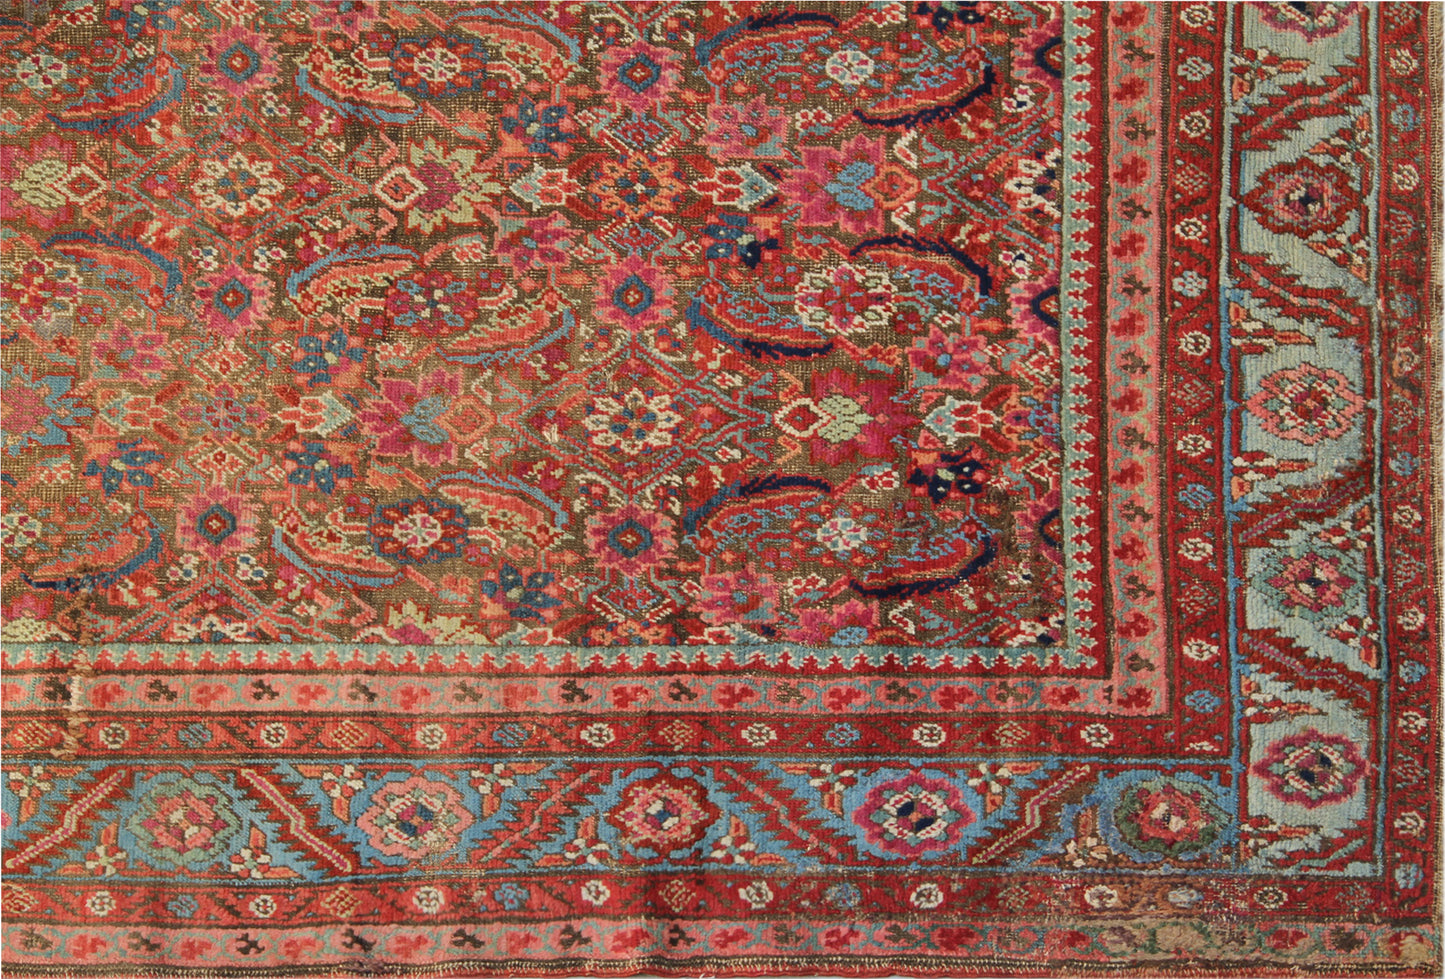 7'x13' Antique Brown Blue Pink Persian Mahal Rug